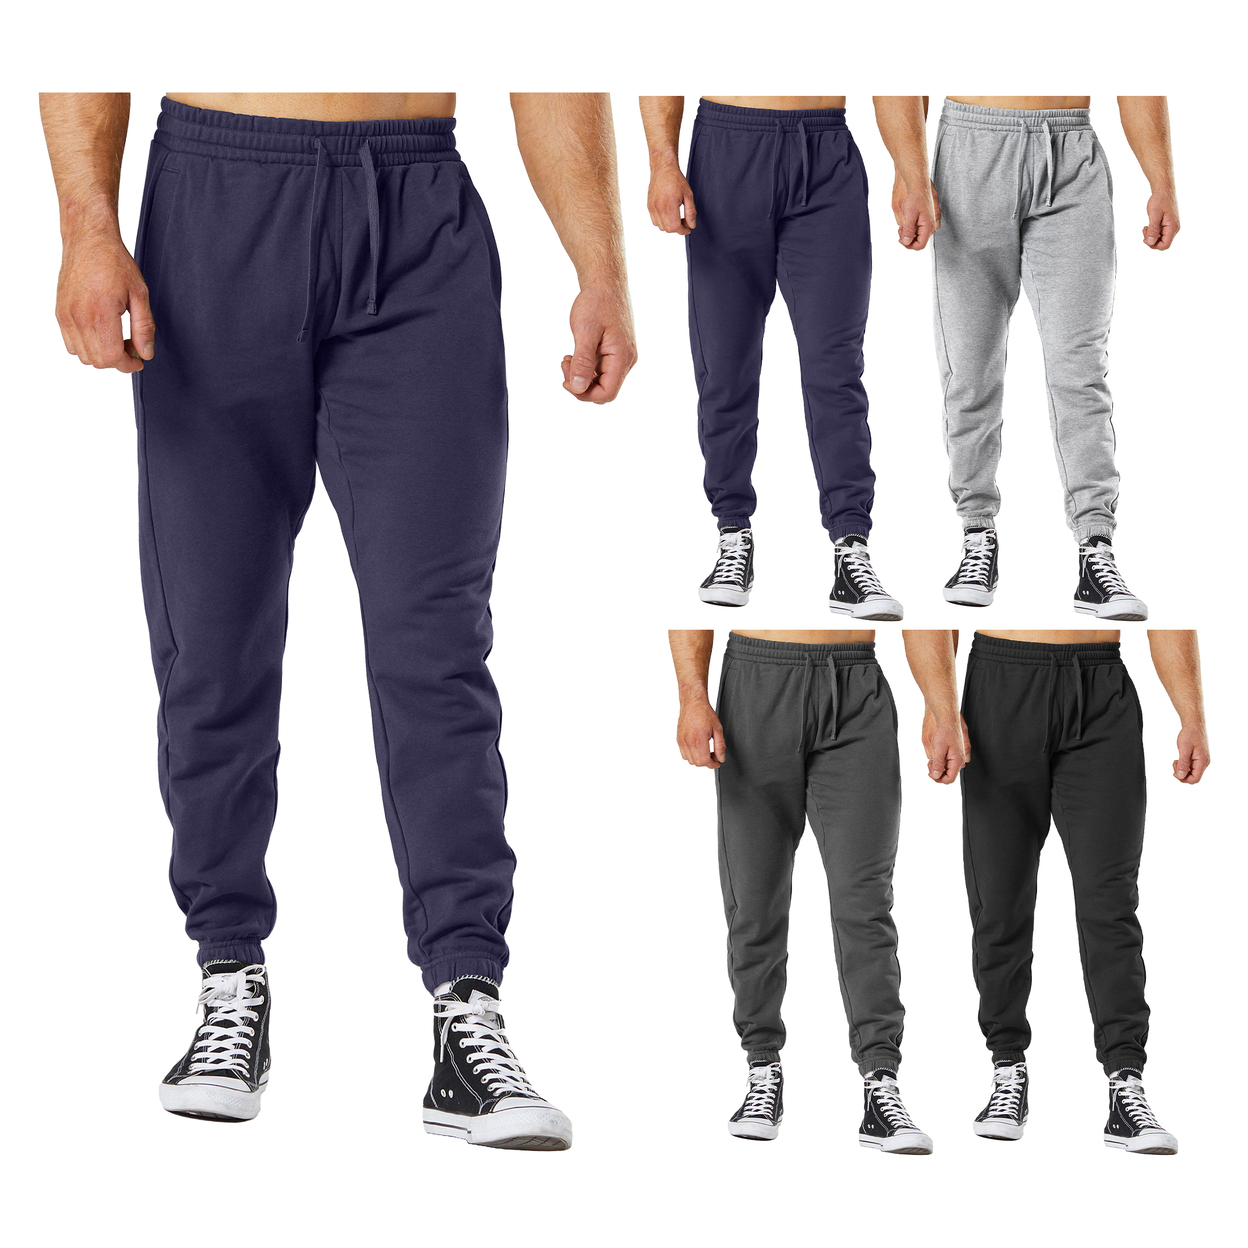 2-Pack: Men's Ultra-Soft Cozy Winter Warm Casual Fleece-Lined Sweatpants Jogger - Black & Black, Xx-large